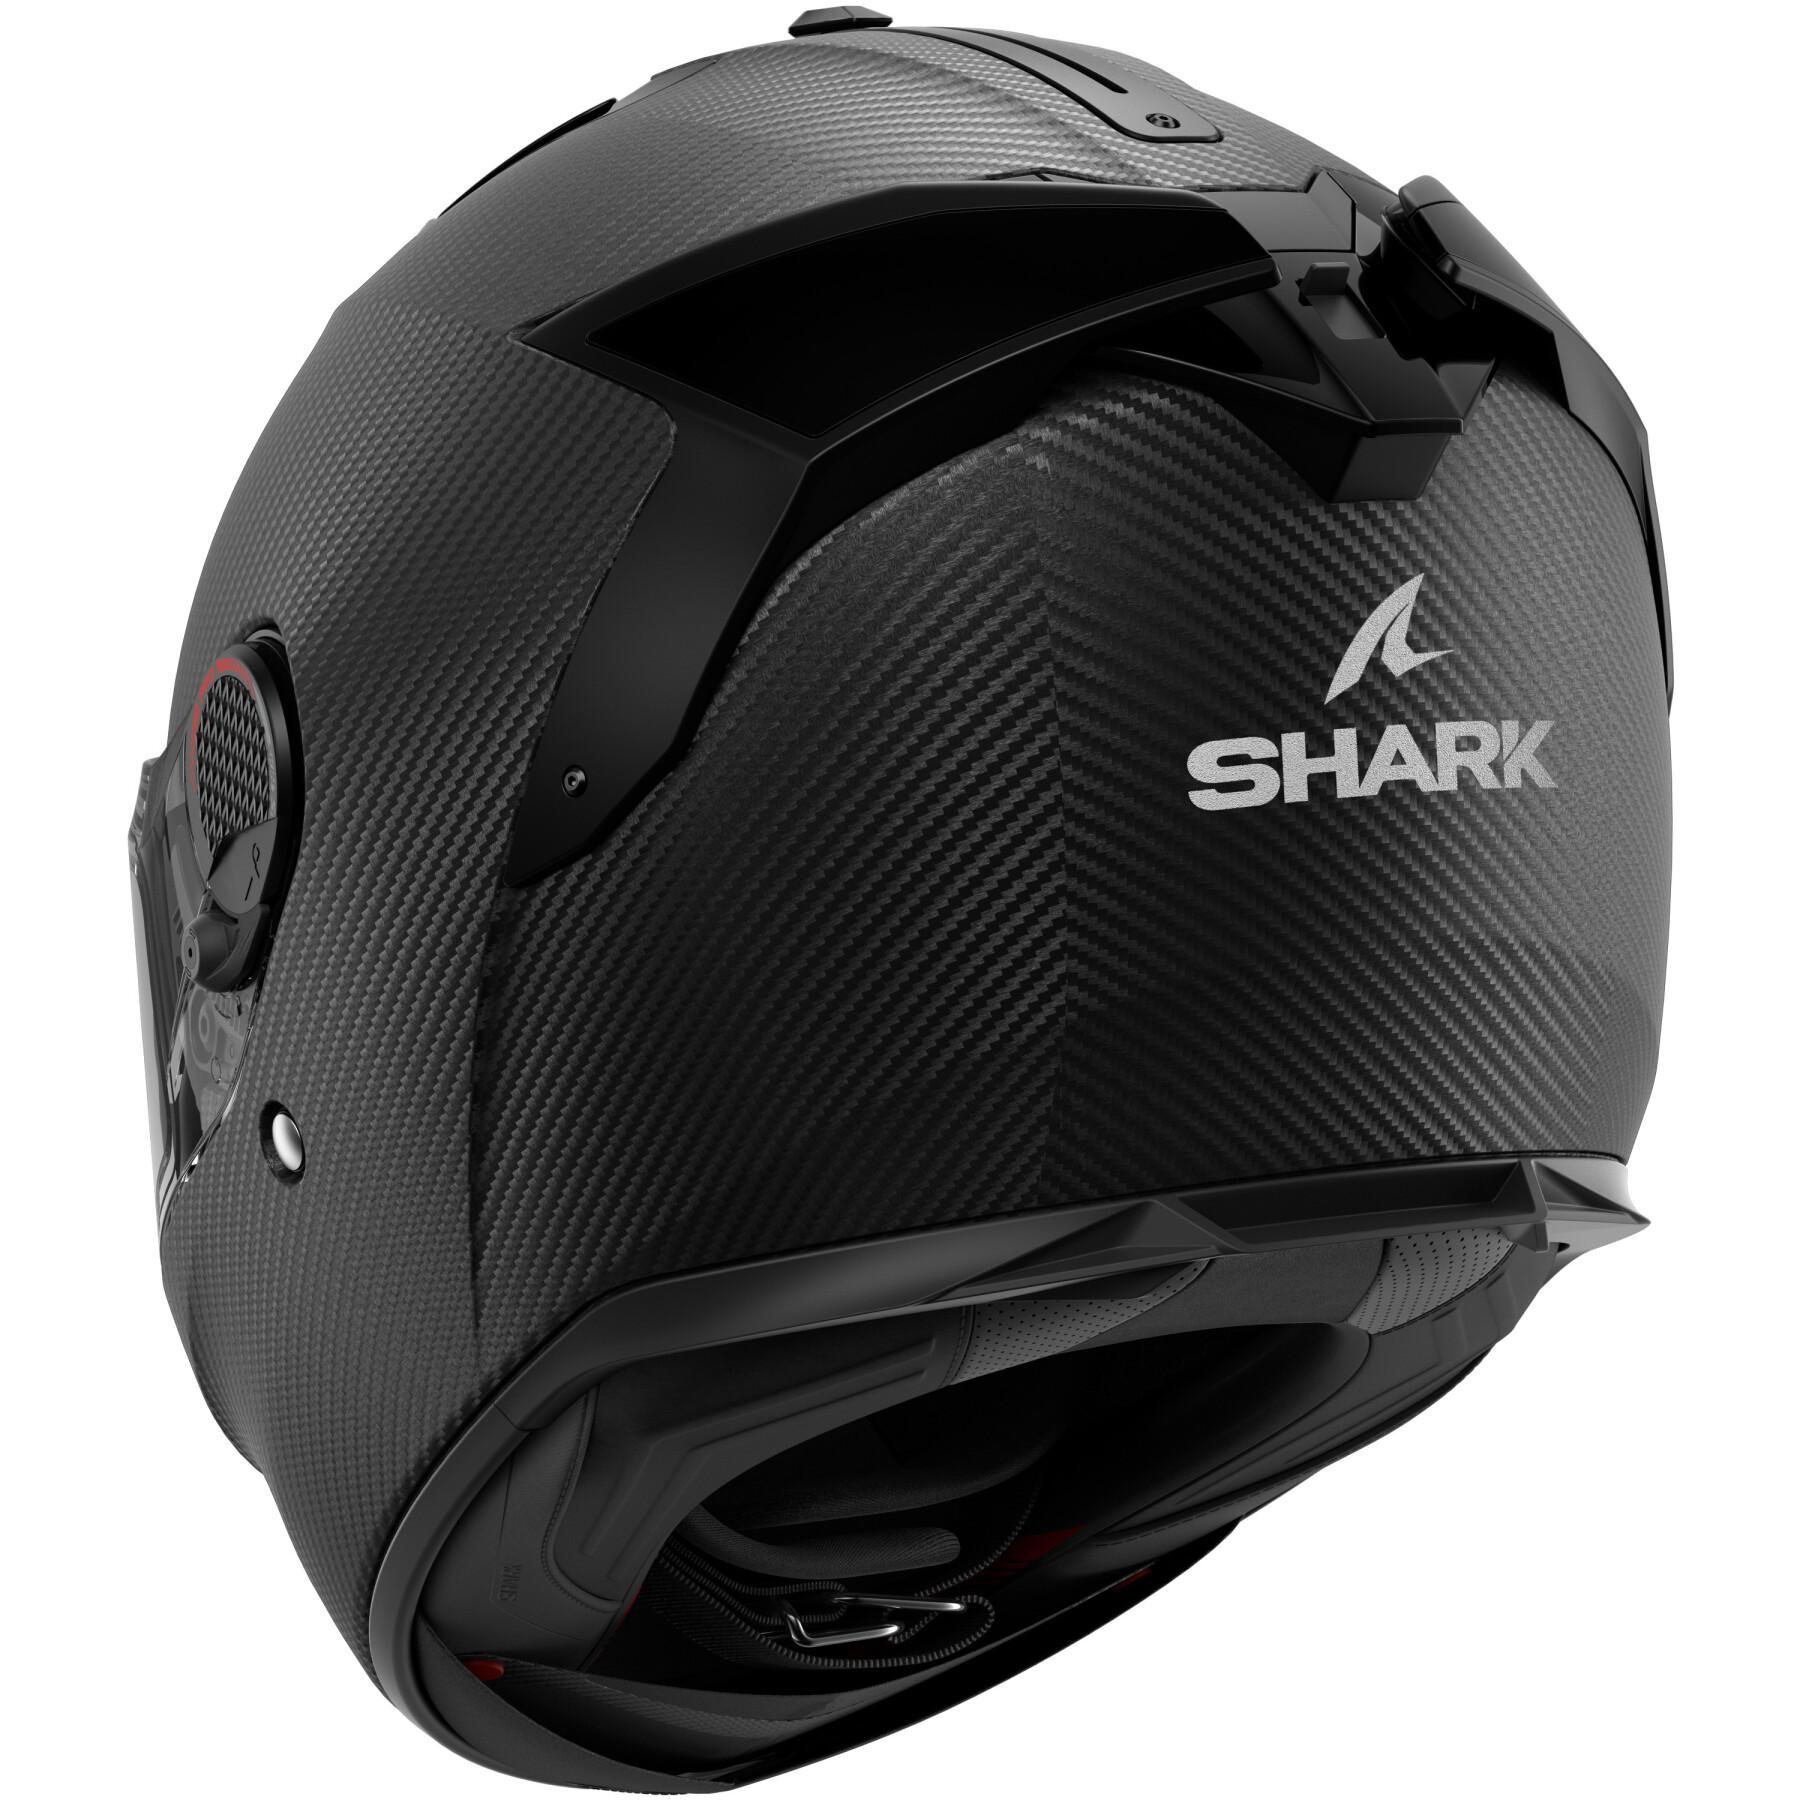 Full face motorcycle helmet Shark Spartan Gt Pro Carbon Skin